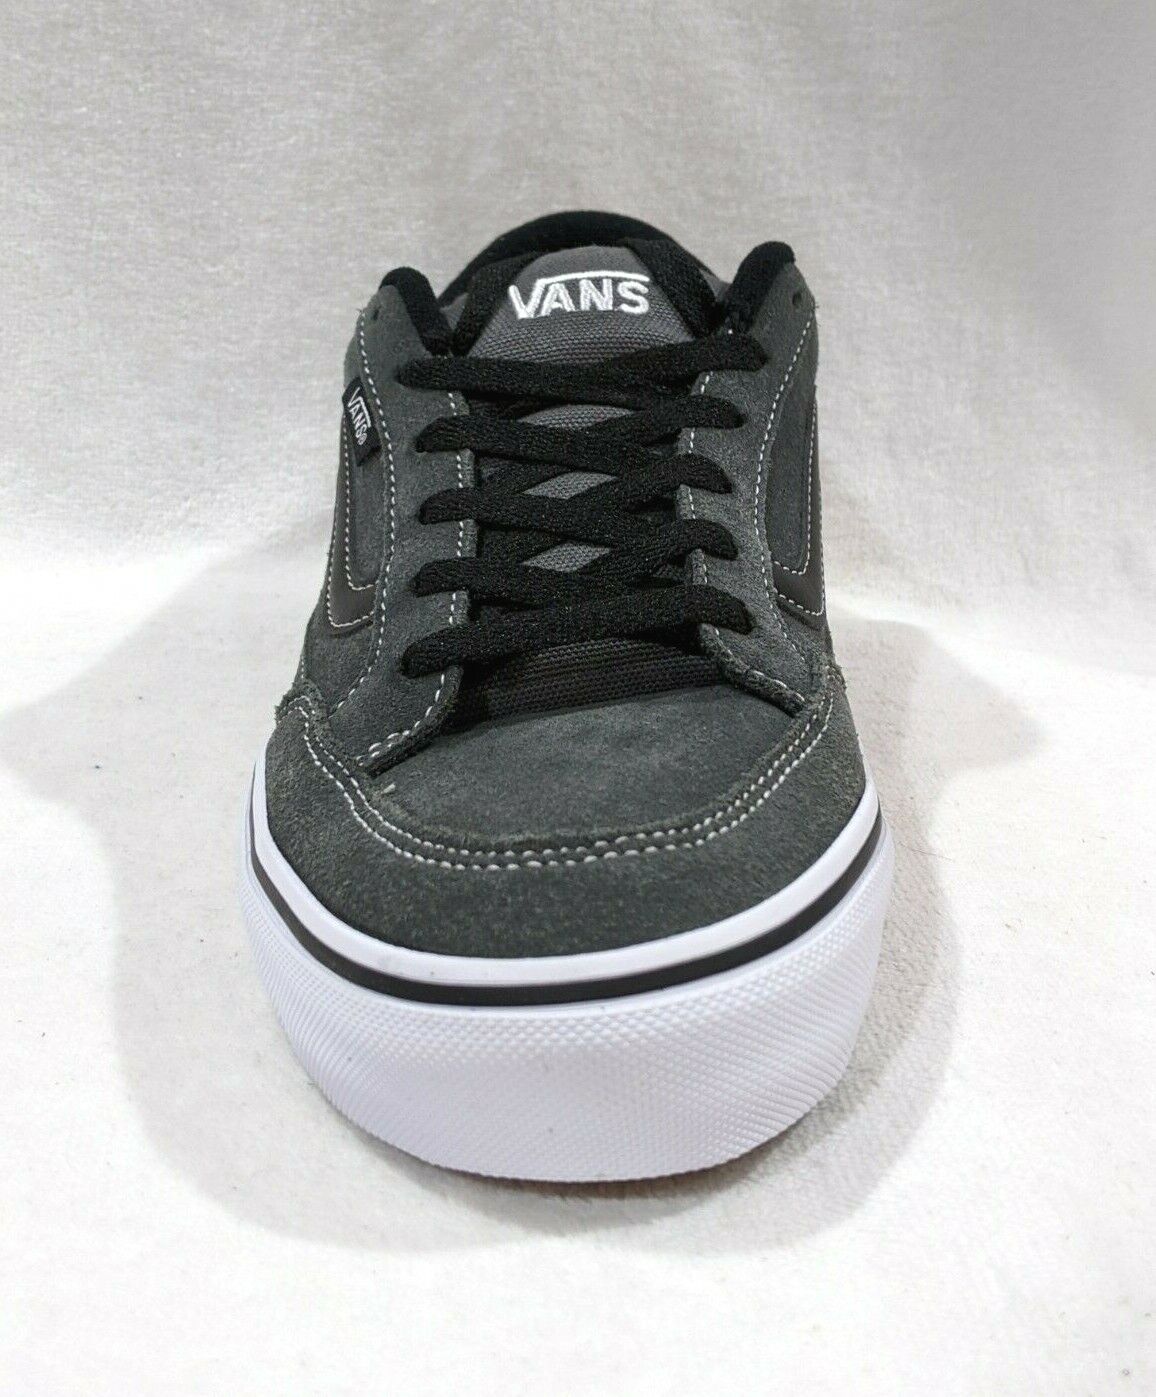 Vans Men's Bearcat Charcoal/White/Black Suede Skate Shoes - Assorted Sizes  NWB